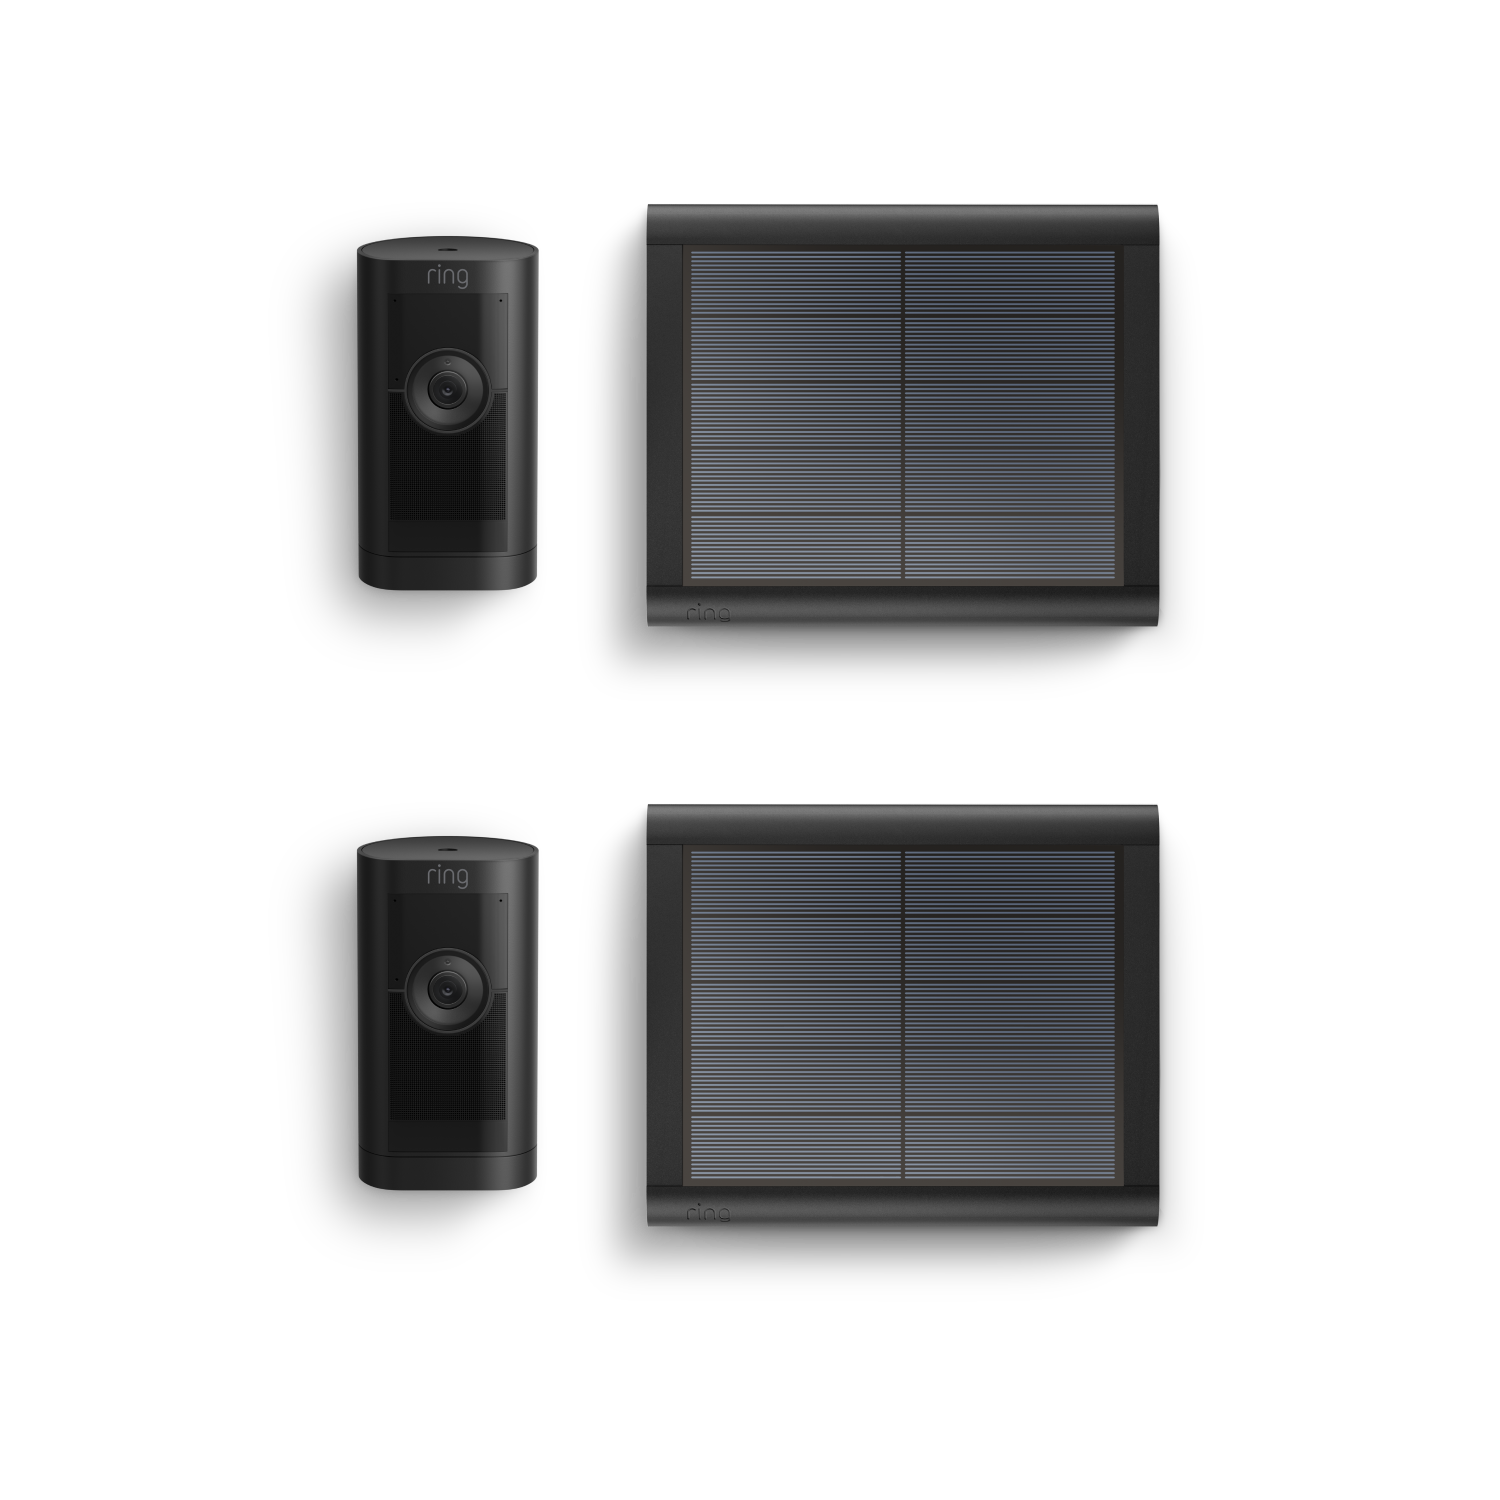 2-Pack Stick Up Cam Pro Solar (Outdoor Camera) - Black